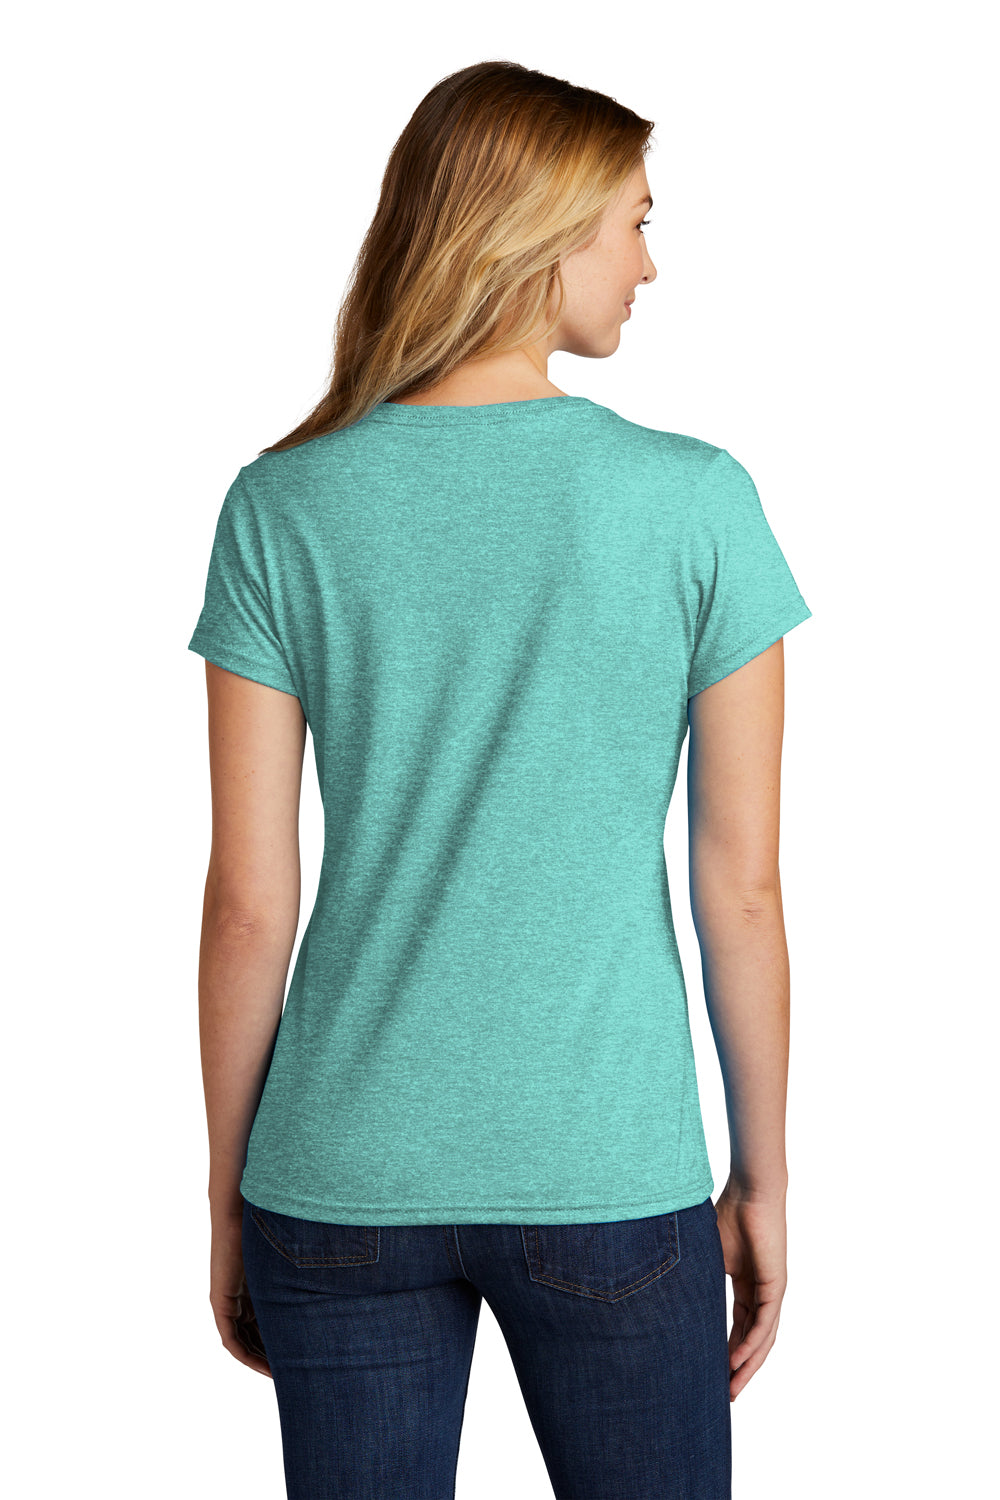 Port & Company Womens Short Sleeve V-Neck T-Shirt Heather Vivid Teal Green Side